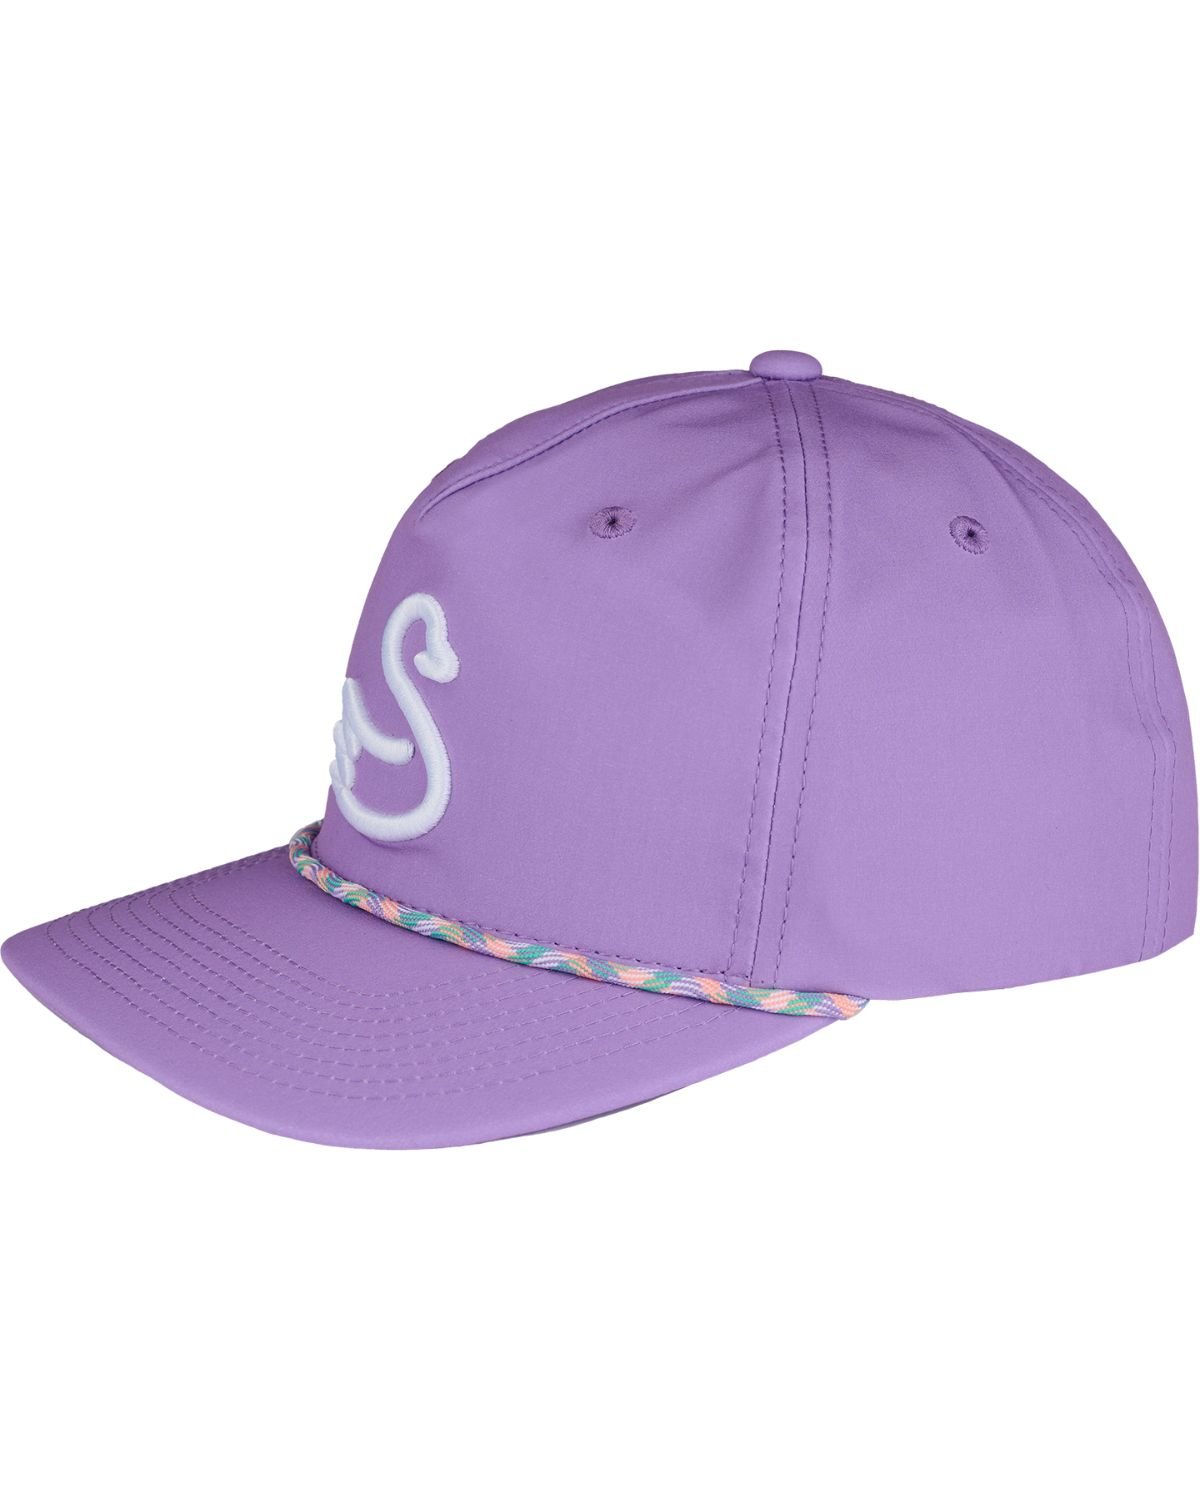 Swannies Golf - Men's Monroe Hat